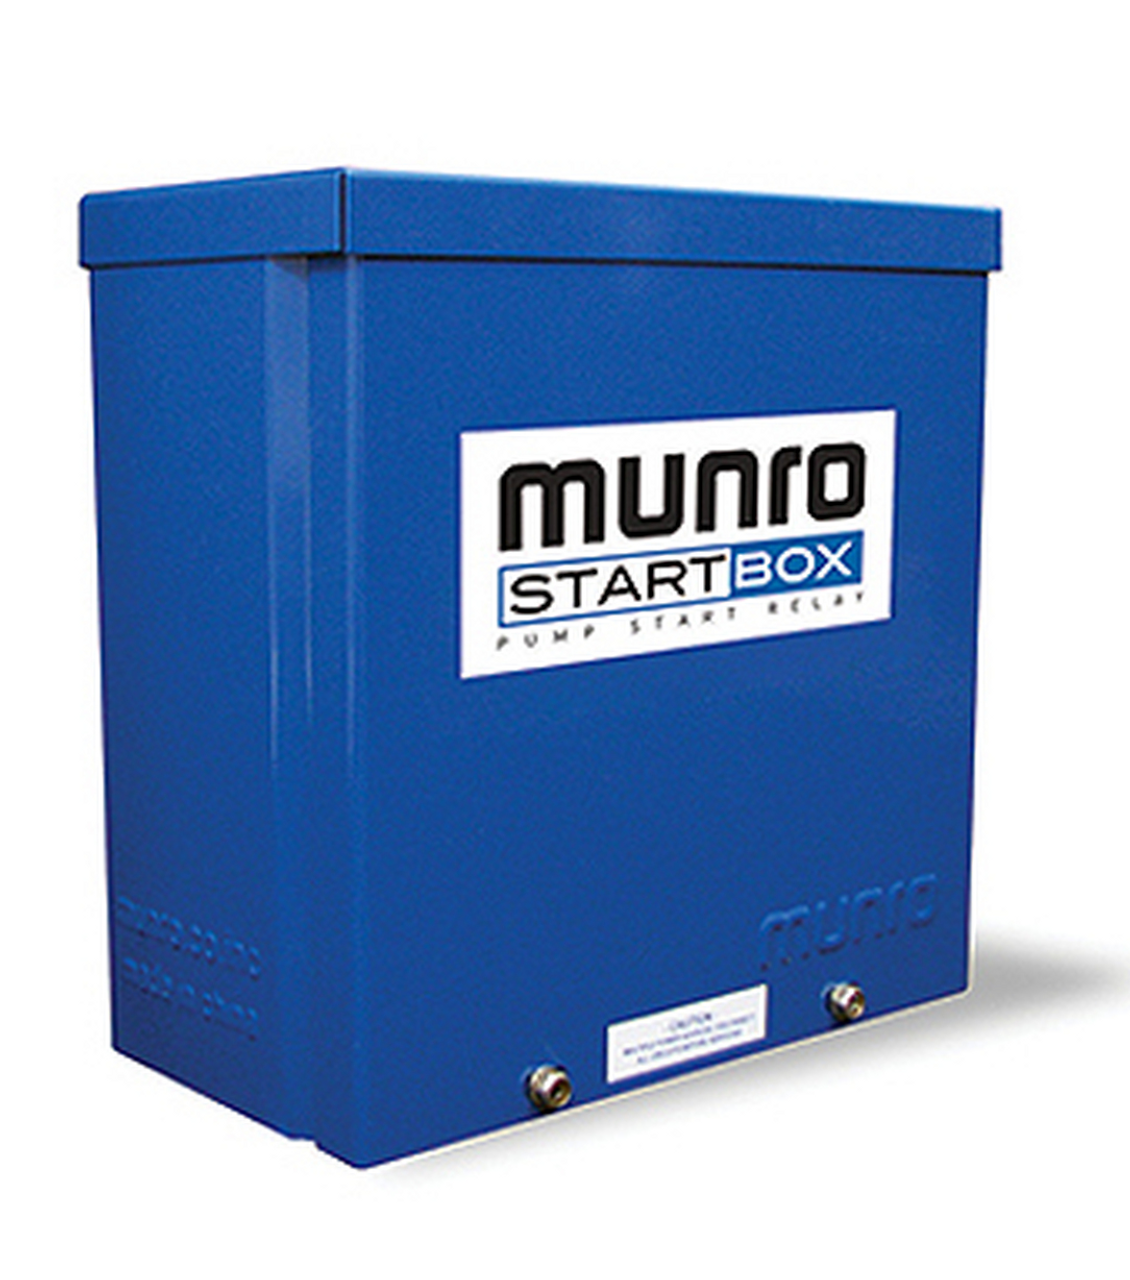 Munro StartBoxâ„¢ - 110 Volt Signal Standard Start Box powder coated blue MPSR110A